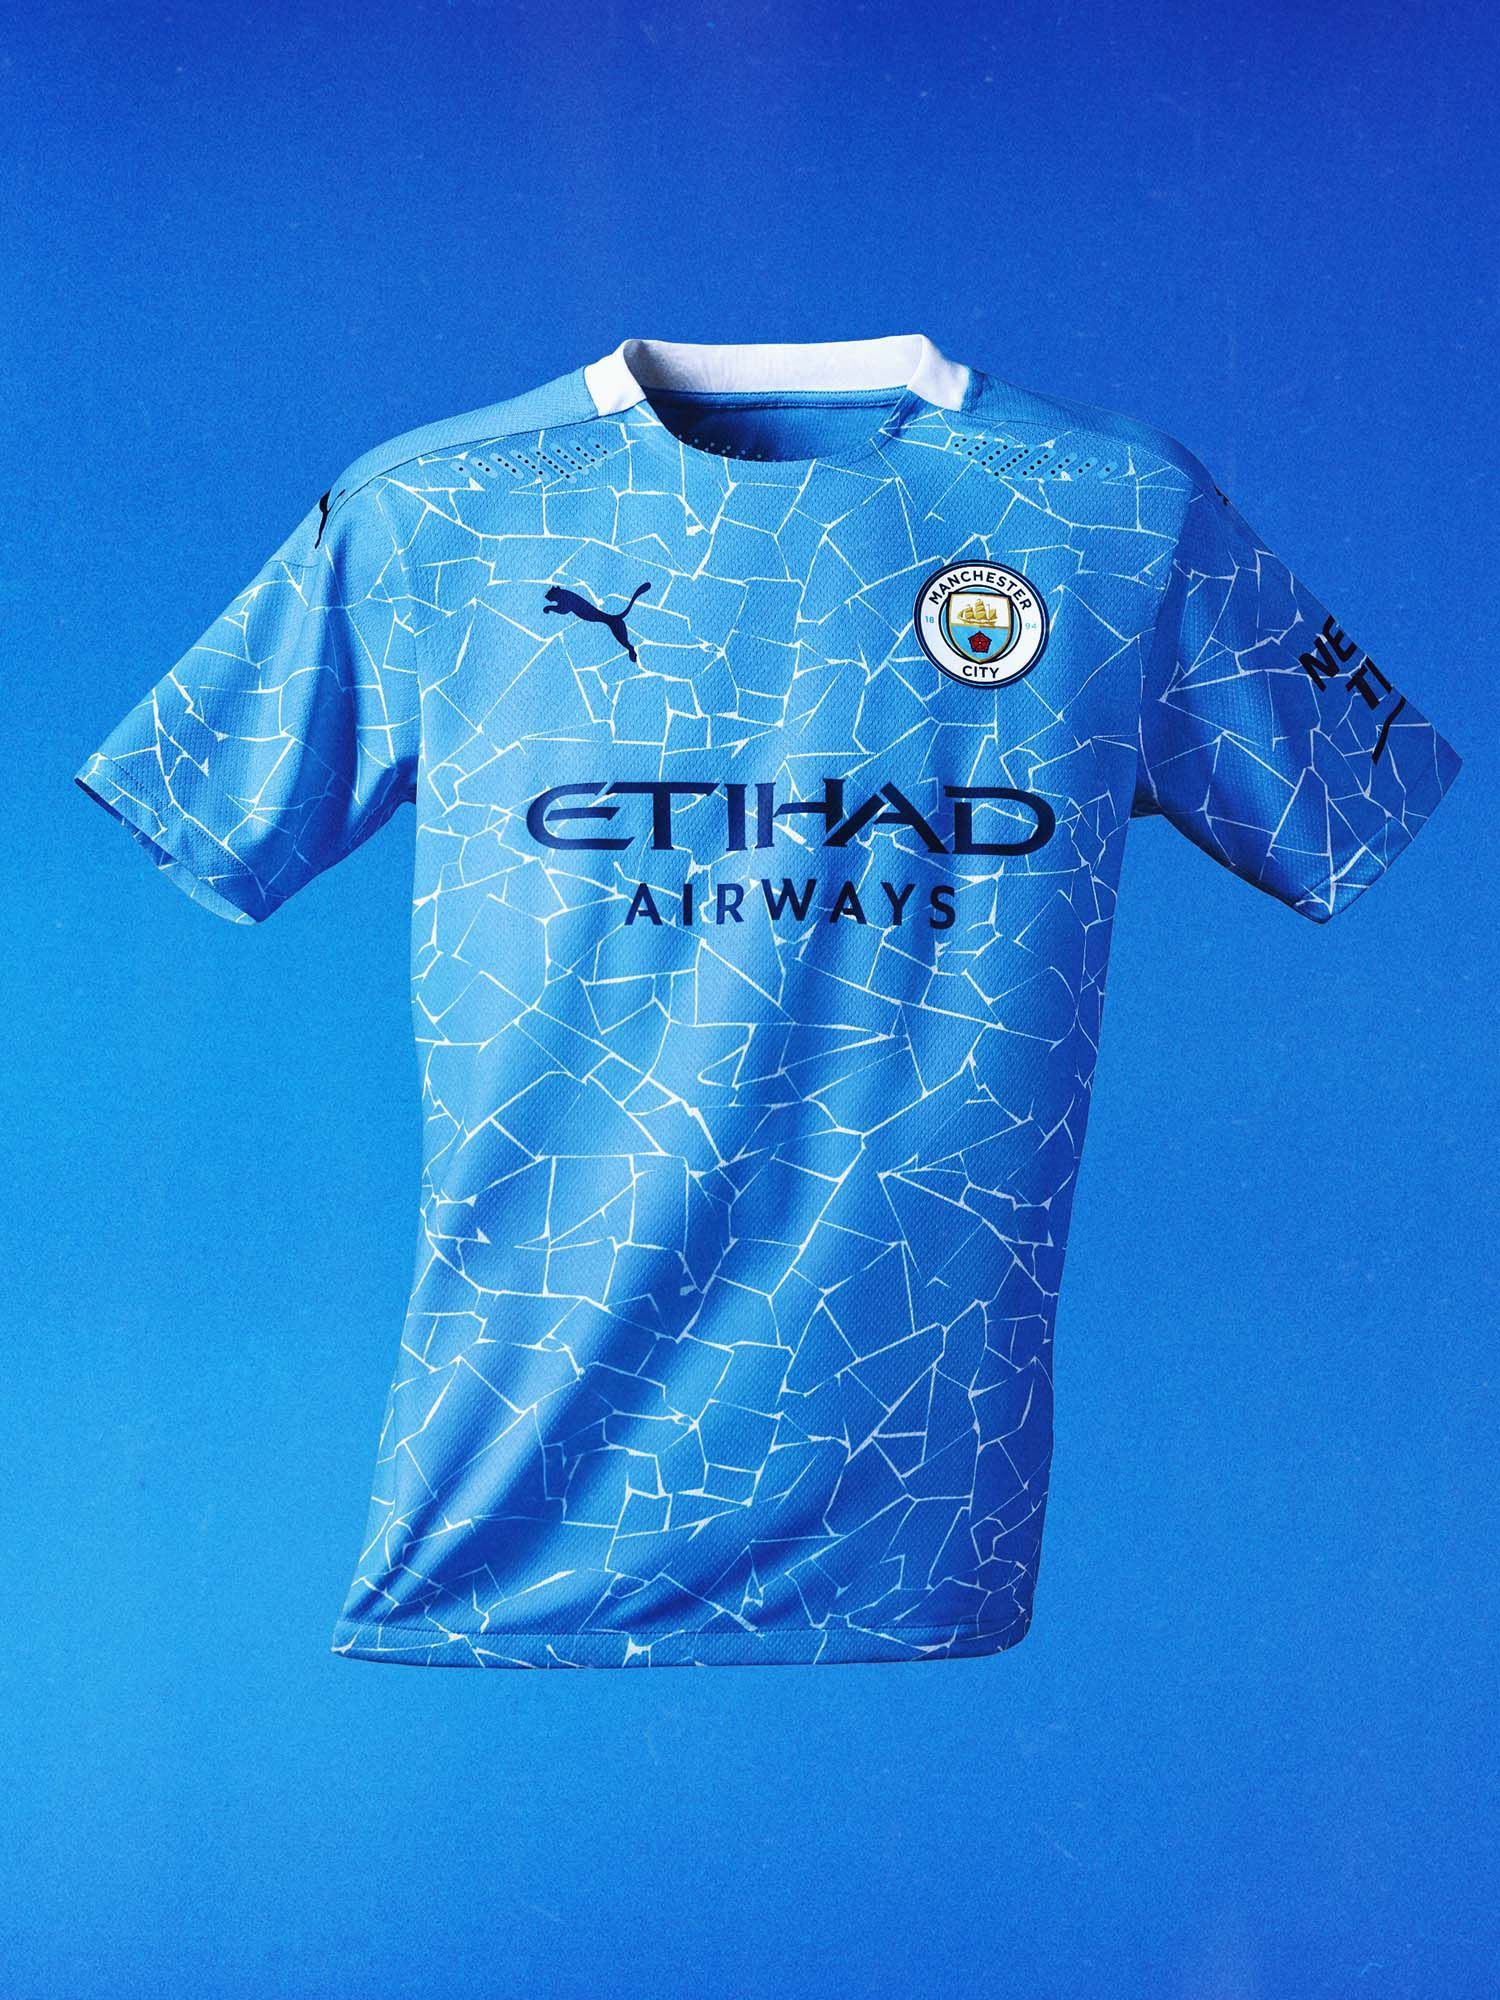 PUMA Launch Manchester City 20 21 Home Shirt In 2021. Manchester City, Manchester City Football Club, Manchester City Wallpaper